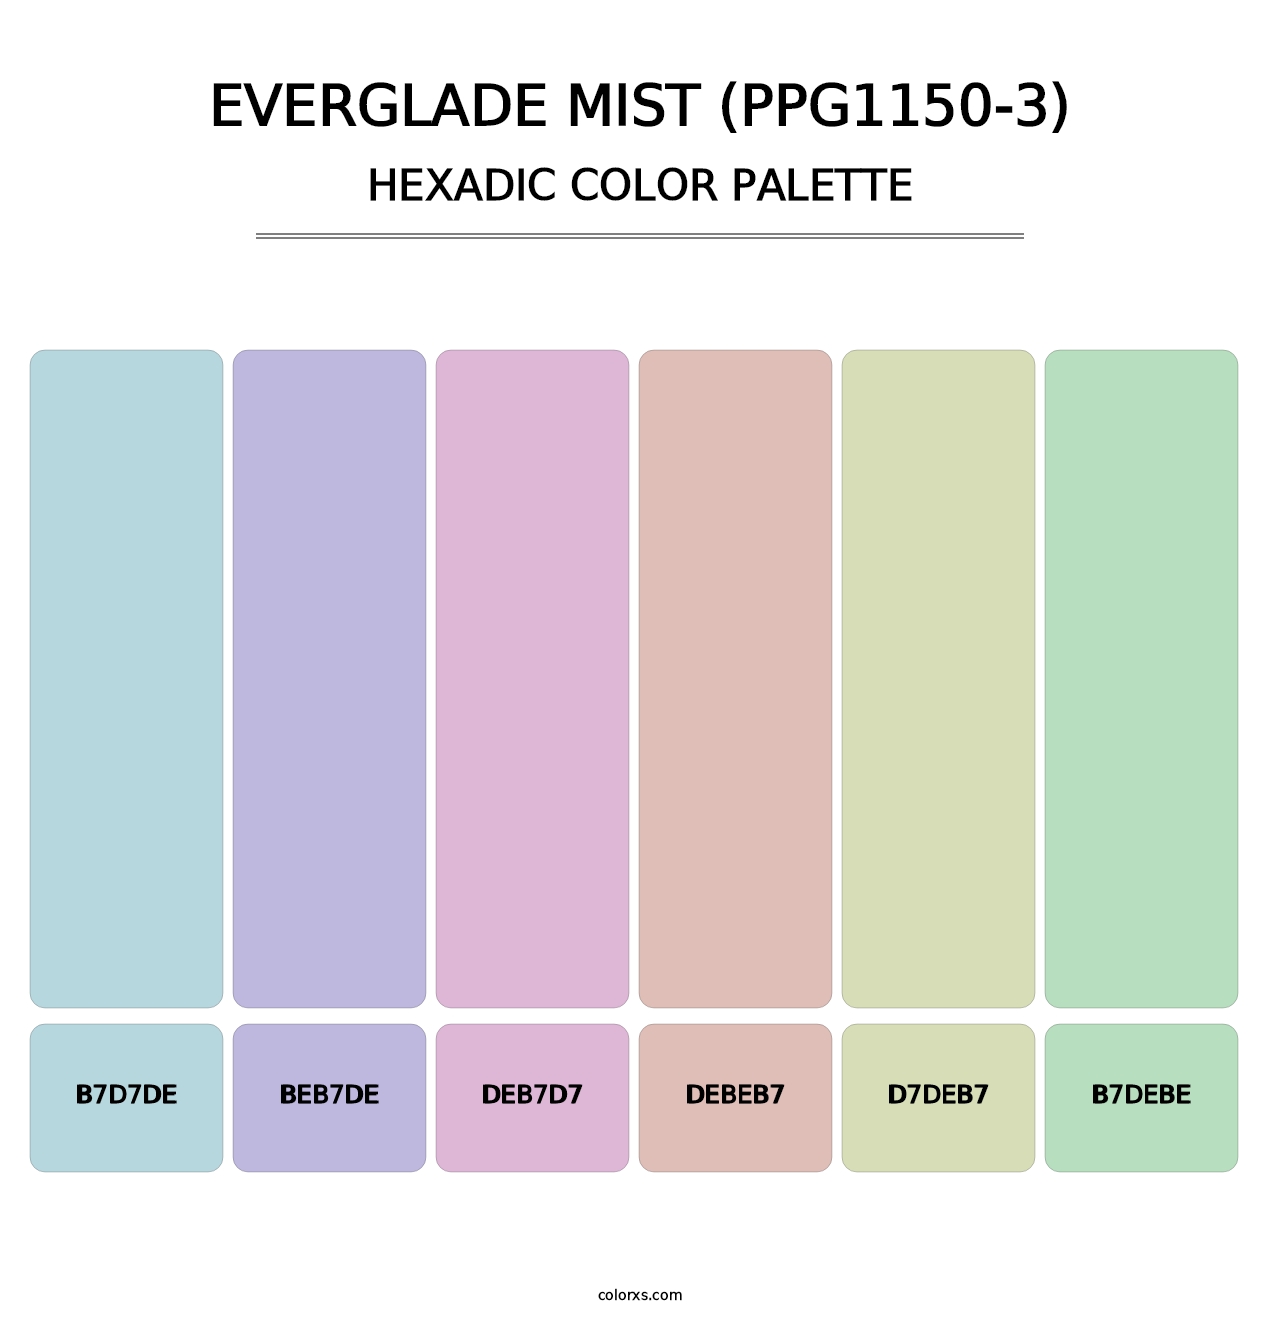 Everglade Mist (PPG1150-3) - Hexadic Color Palette